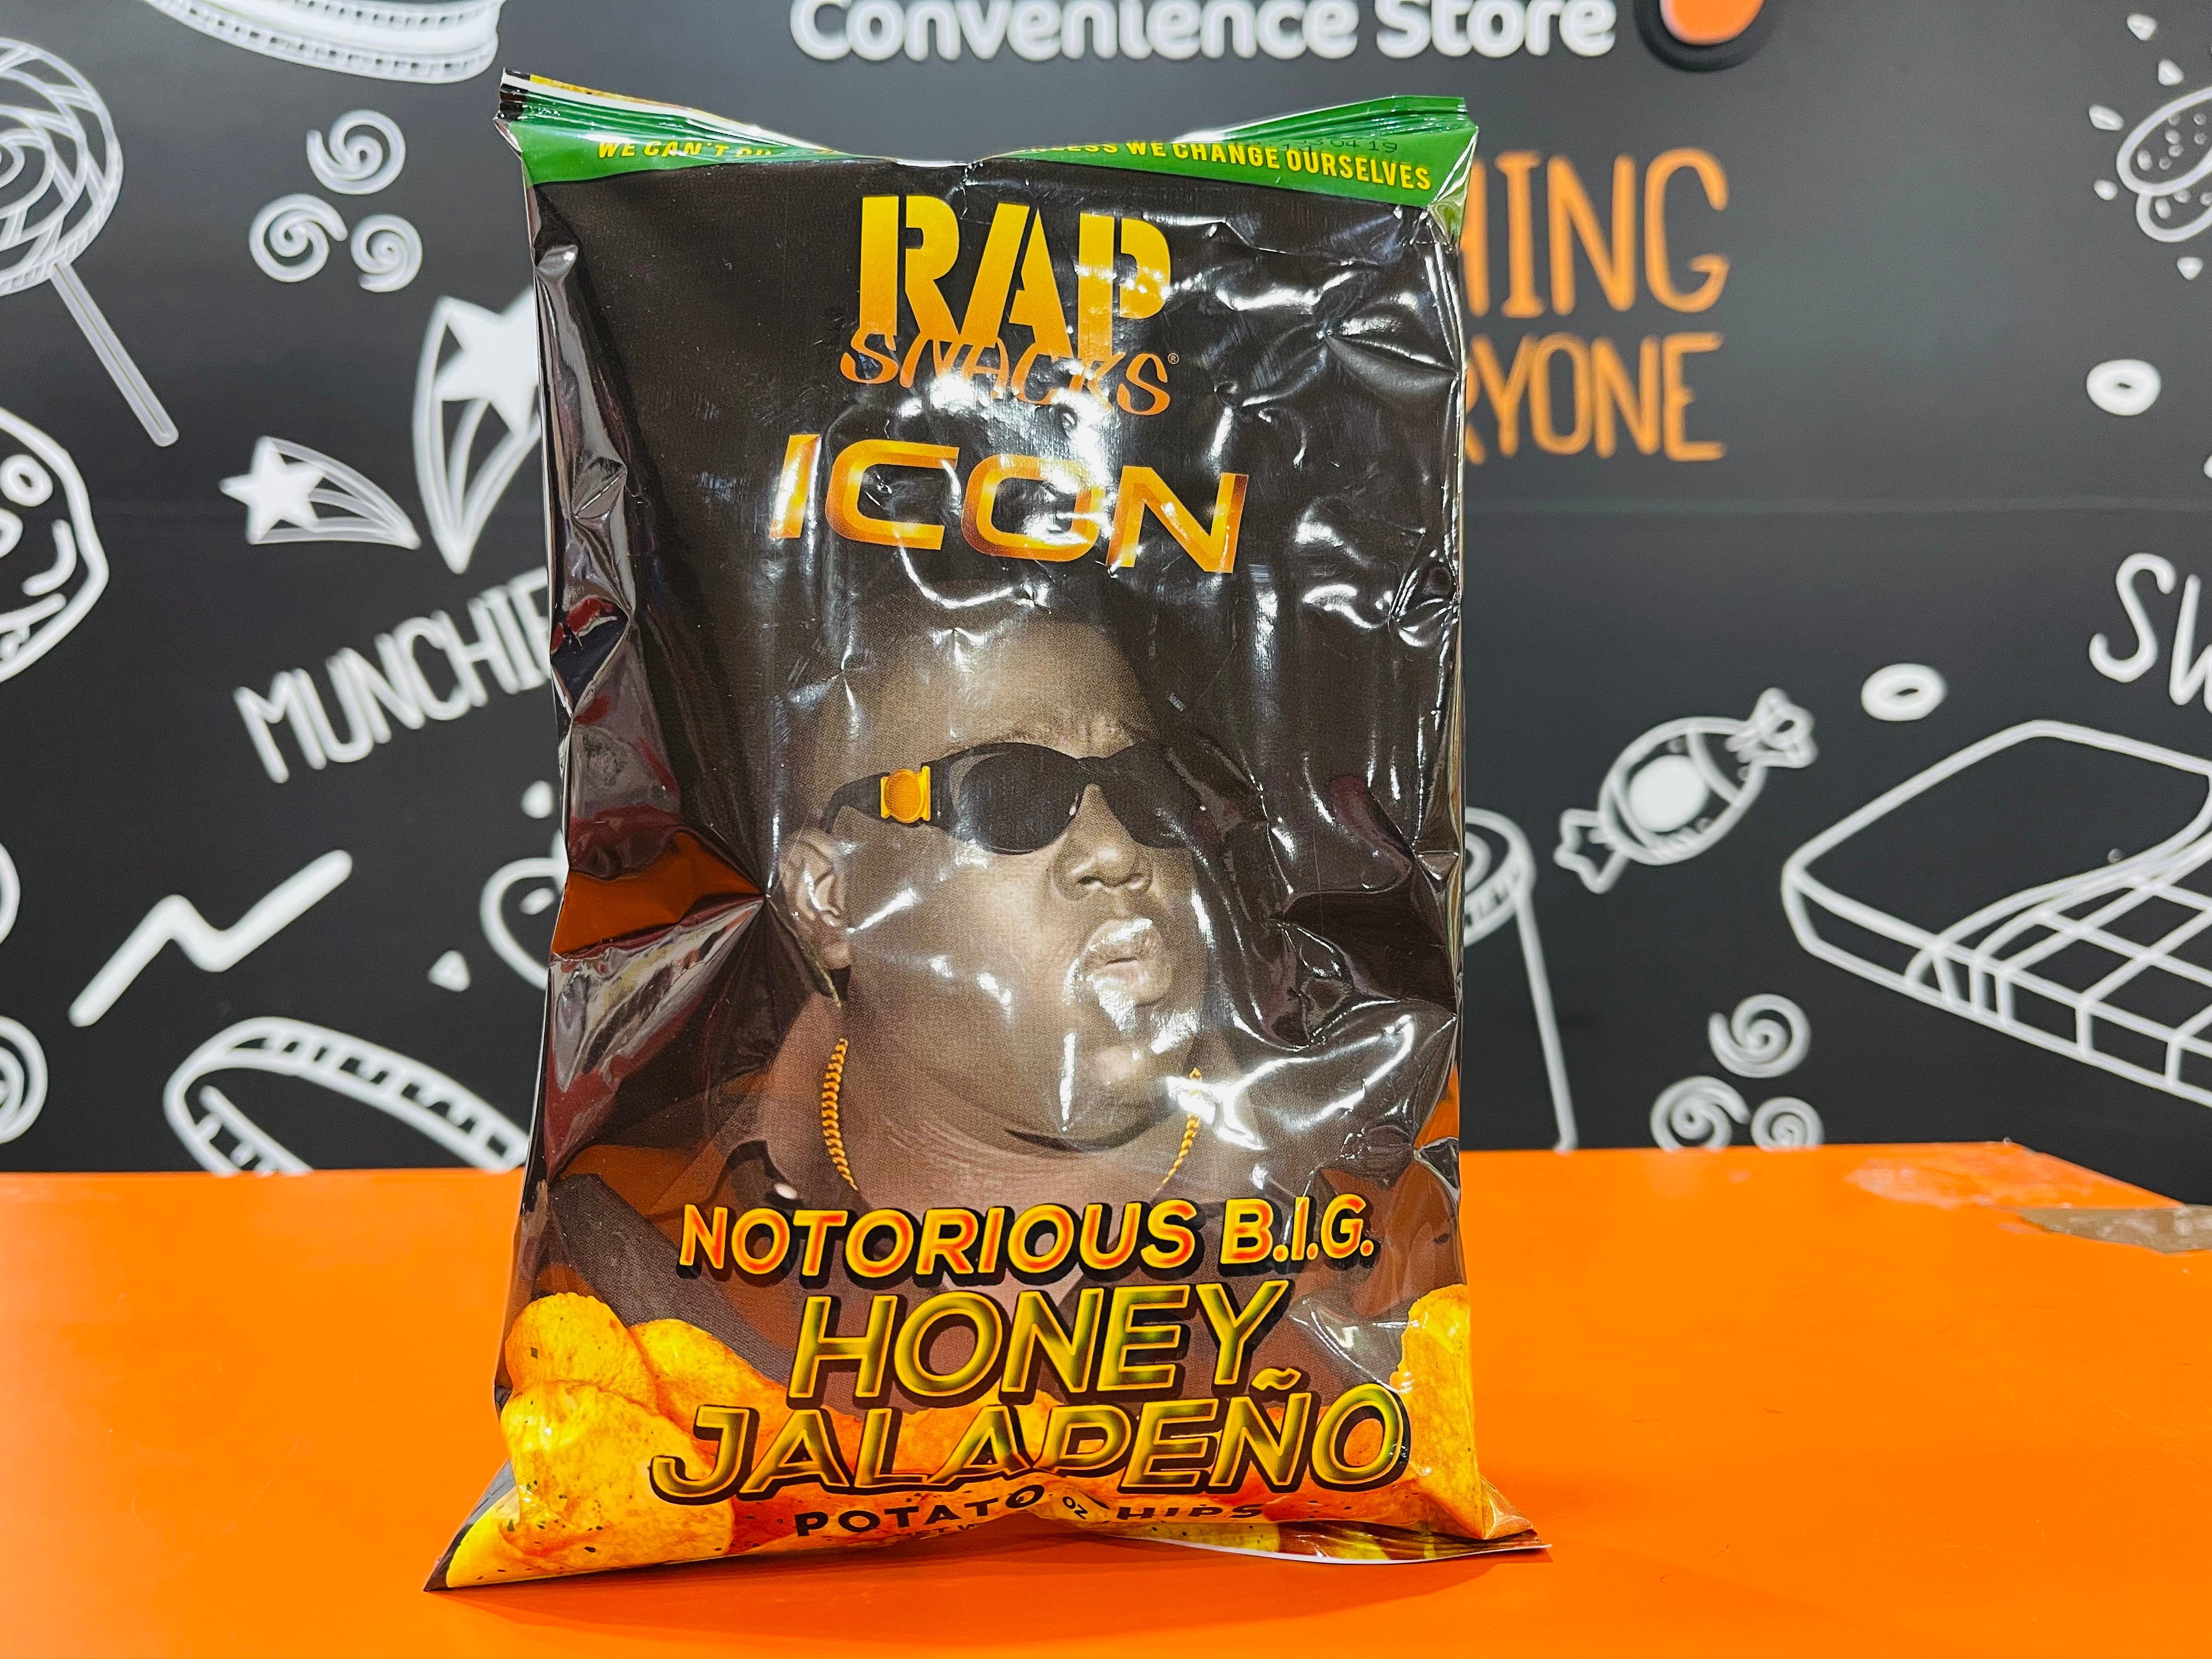 Rap Snacks Icon Honey Jalapeño